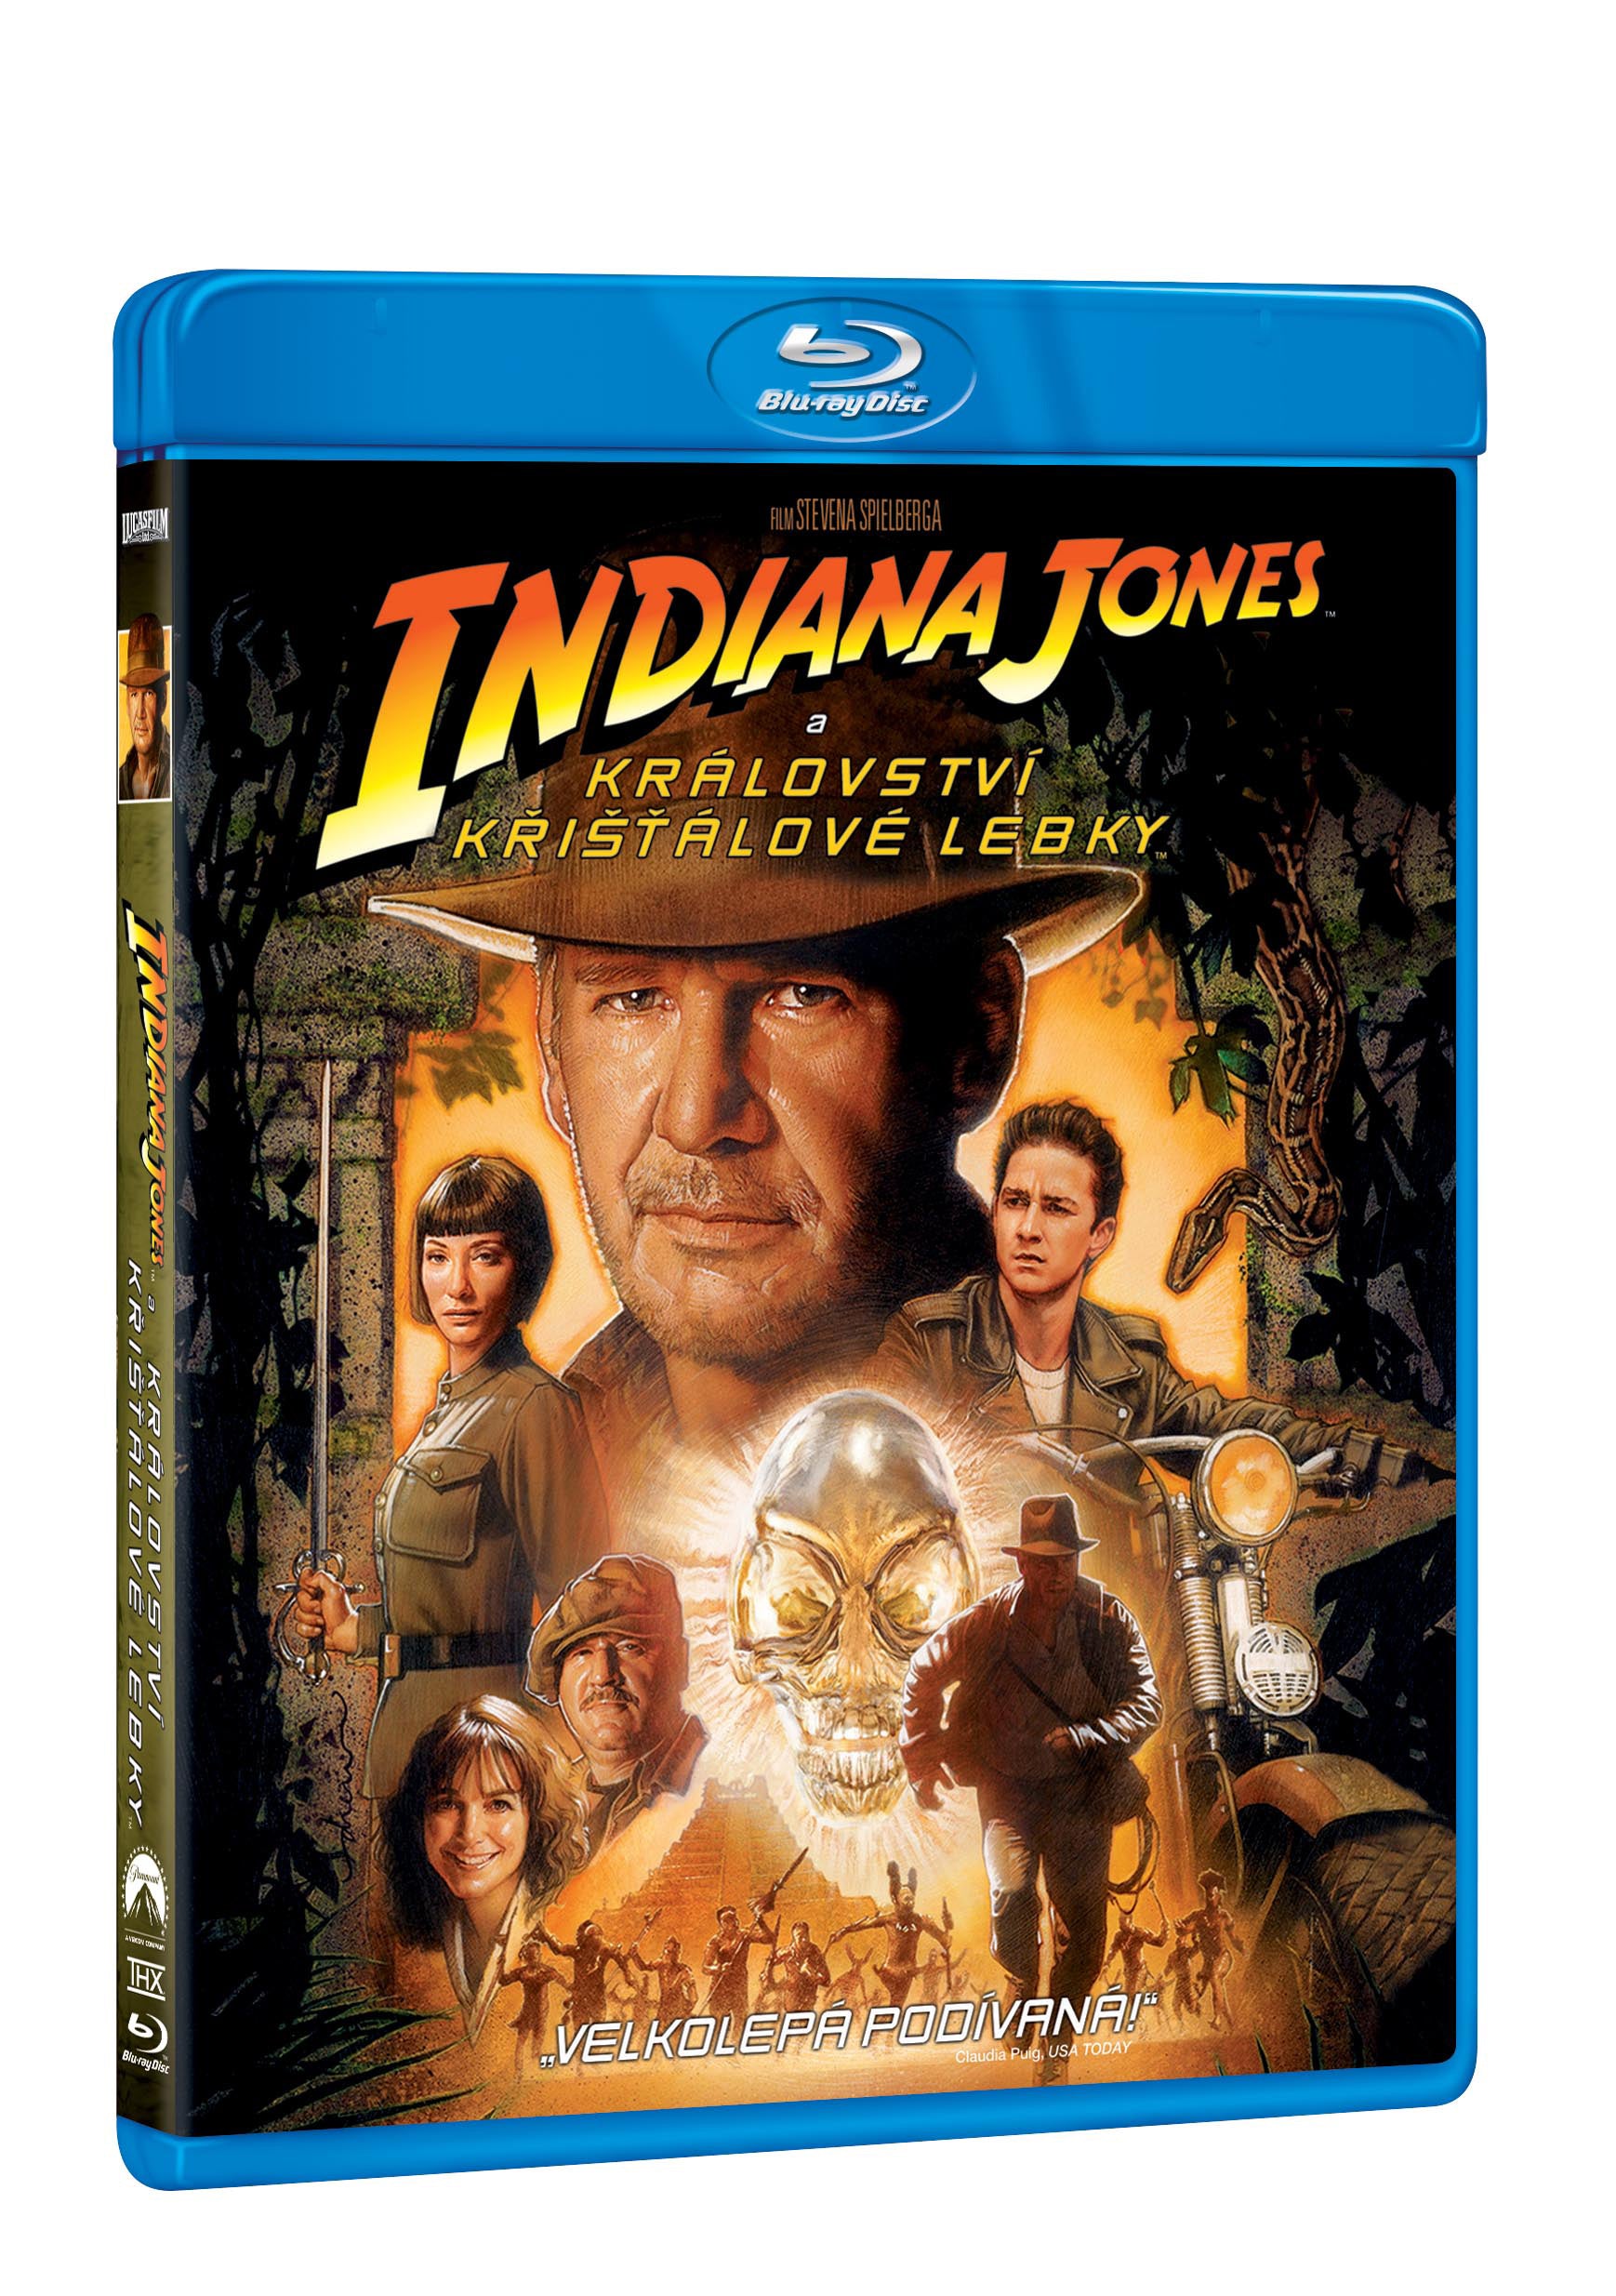 Indiana Jones a kralovstvi kristalove lebky BD / Indiana Jones and the Kingdom of the Crystal Skull - Czech version